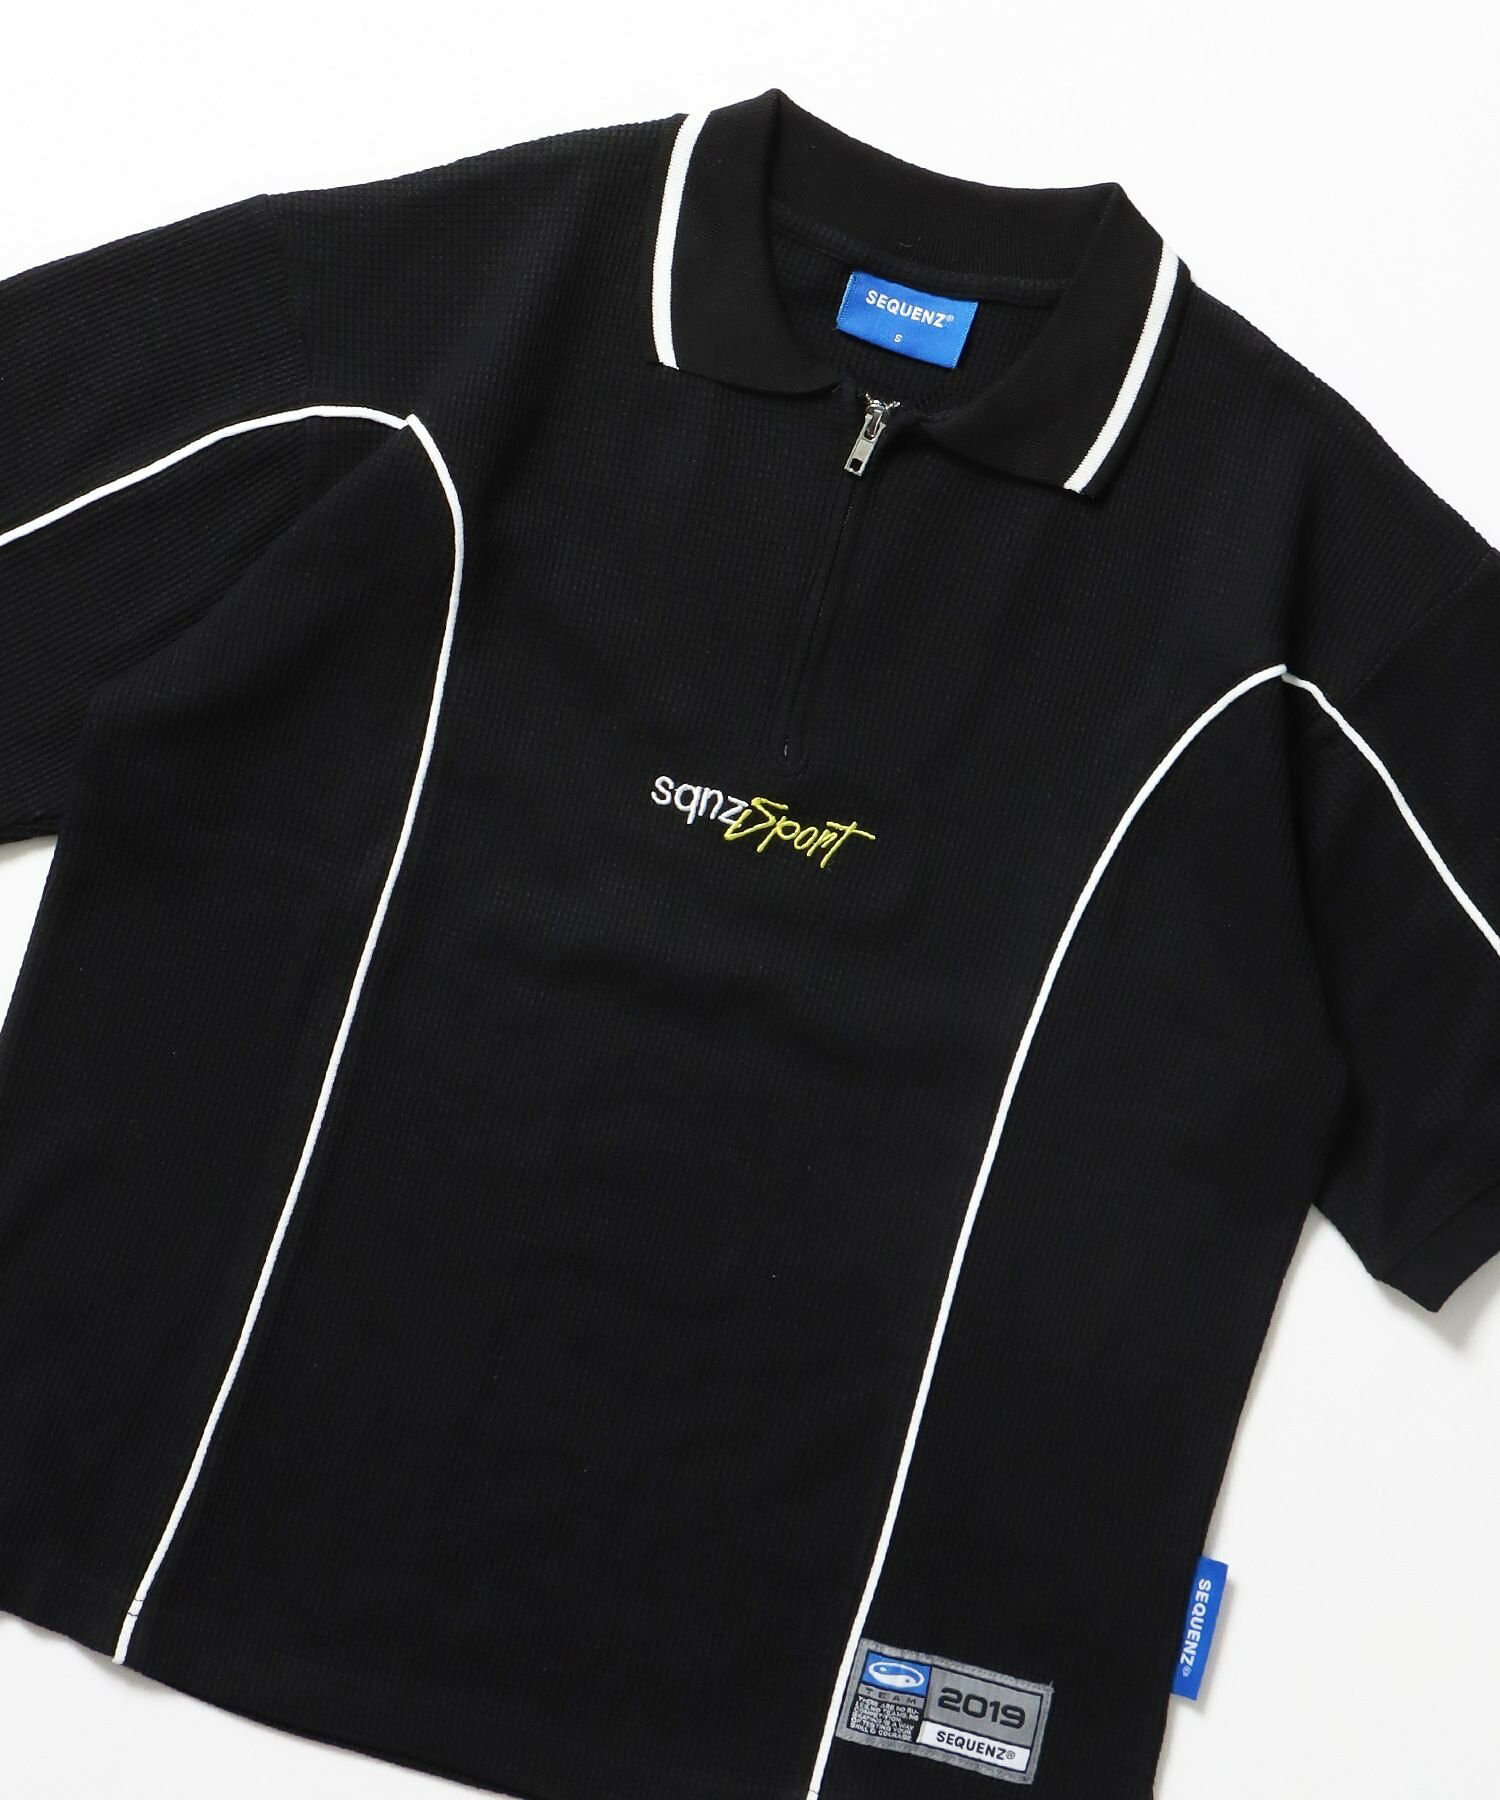 【SEQUENZ】SQNZ SPORT ZIP POLO S/S THERMAL / 衿付き ポロシャツ 配色 パイピング ブランドロゴ ワンポイント